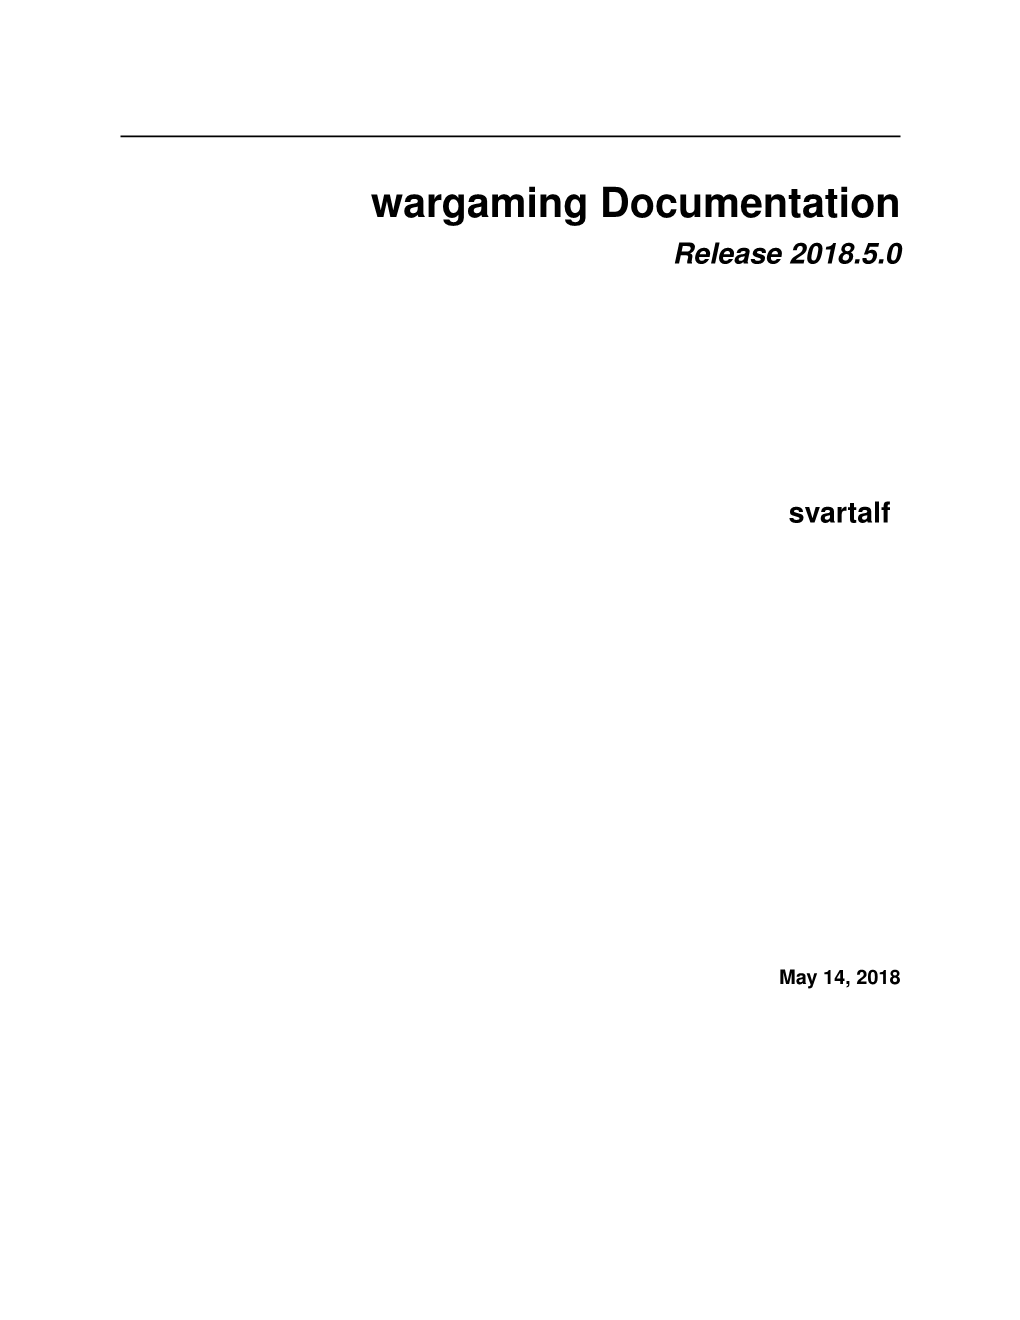 Wargaming Documentation Release 2018.5.0